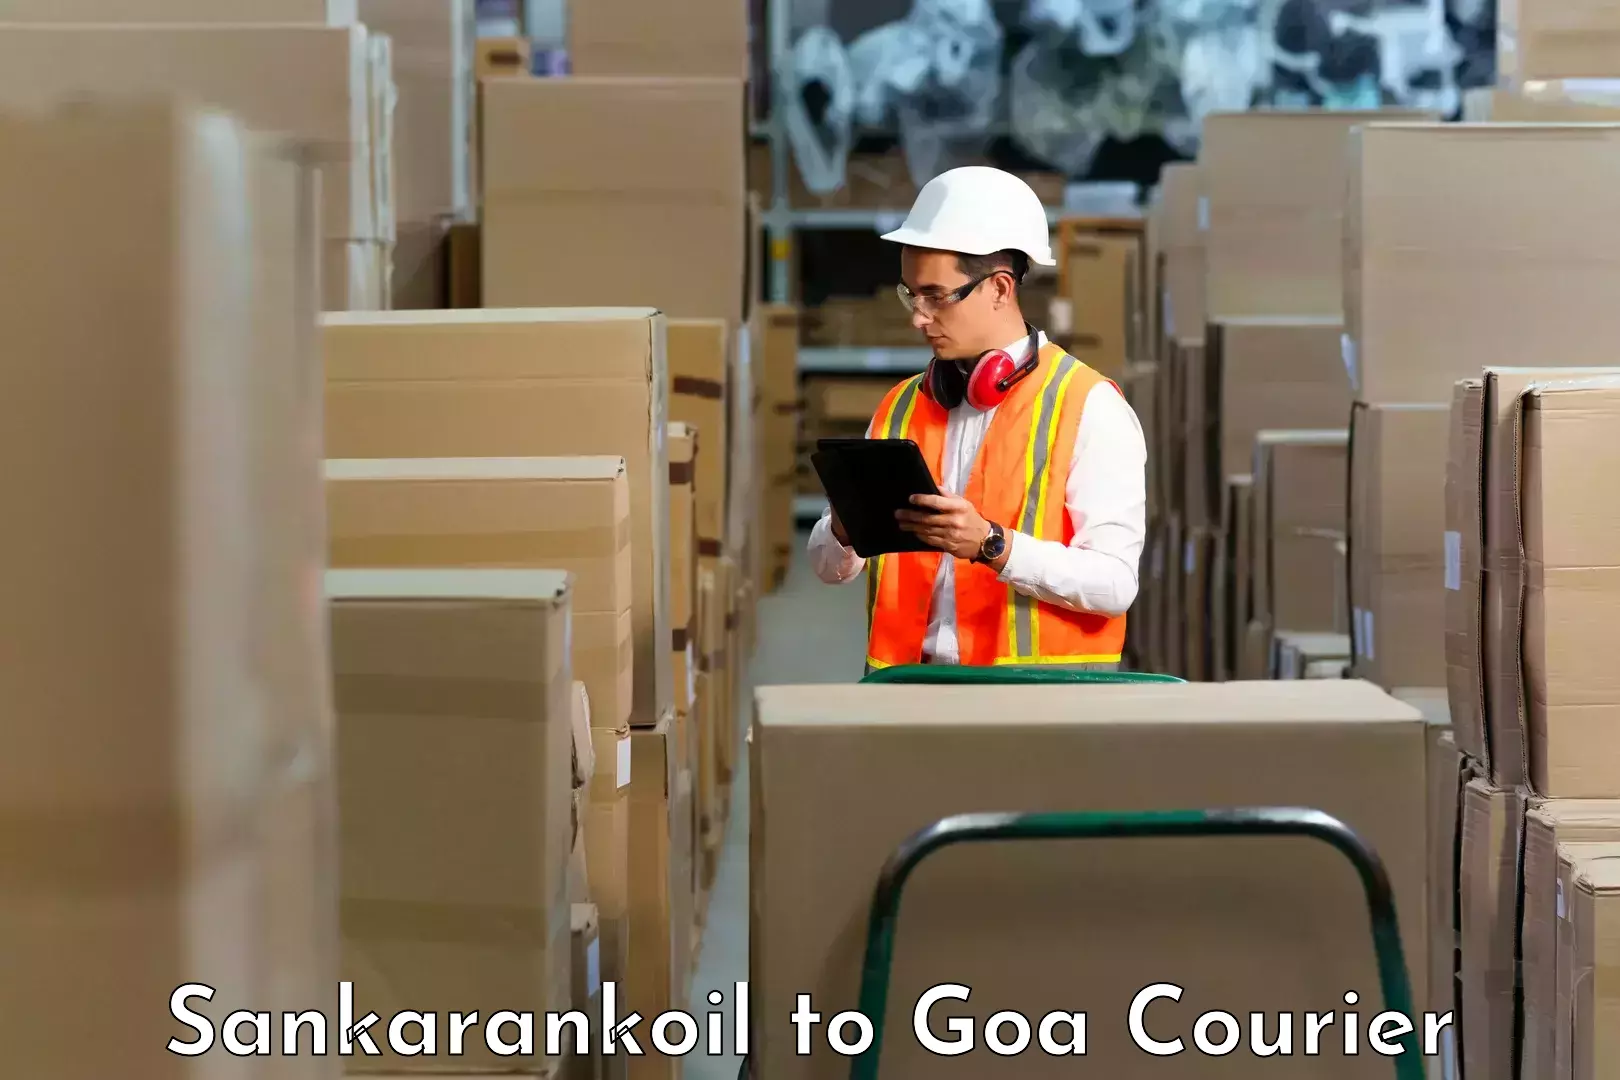 Courier service booking Sankarankoil to Goa